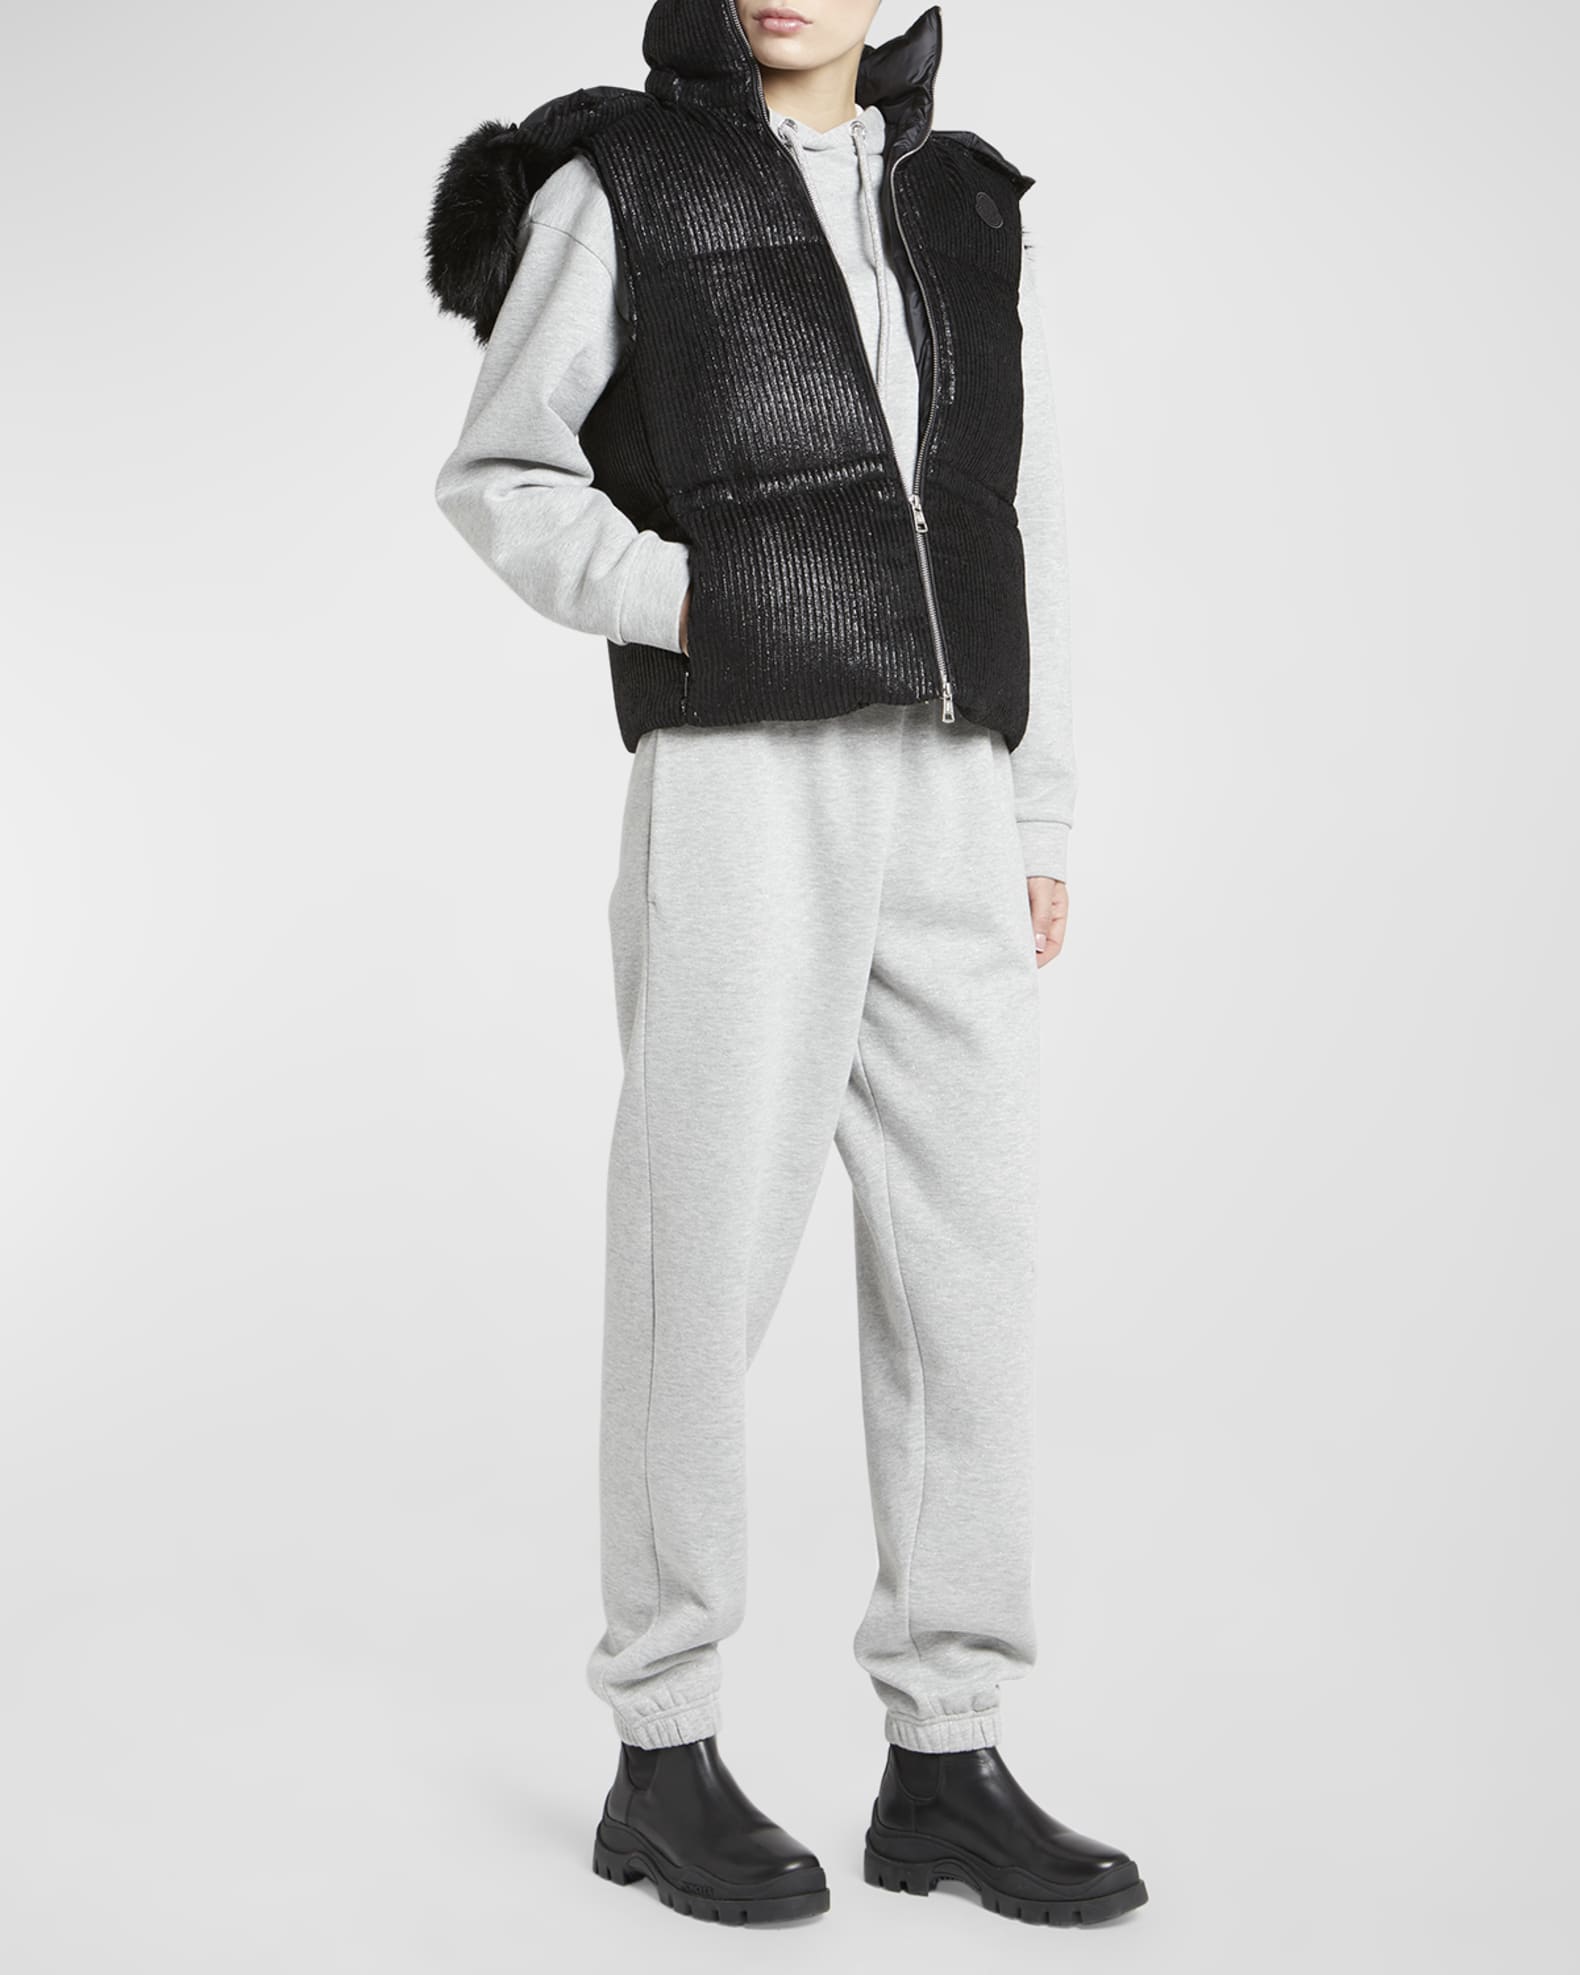 Moncler Mergule Puffer Vest with Faux Fur Hood | Neiman Marcus